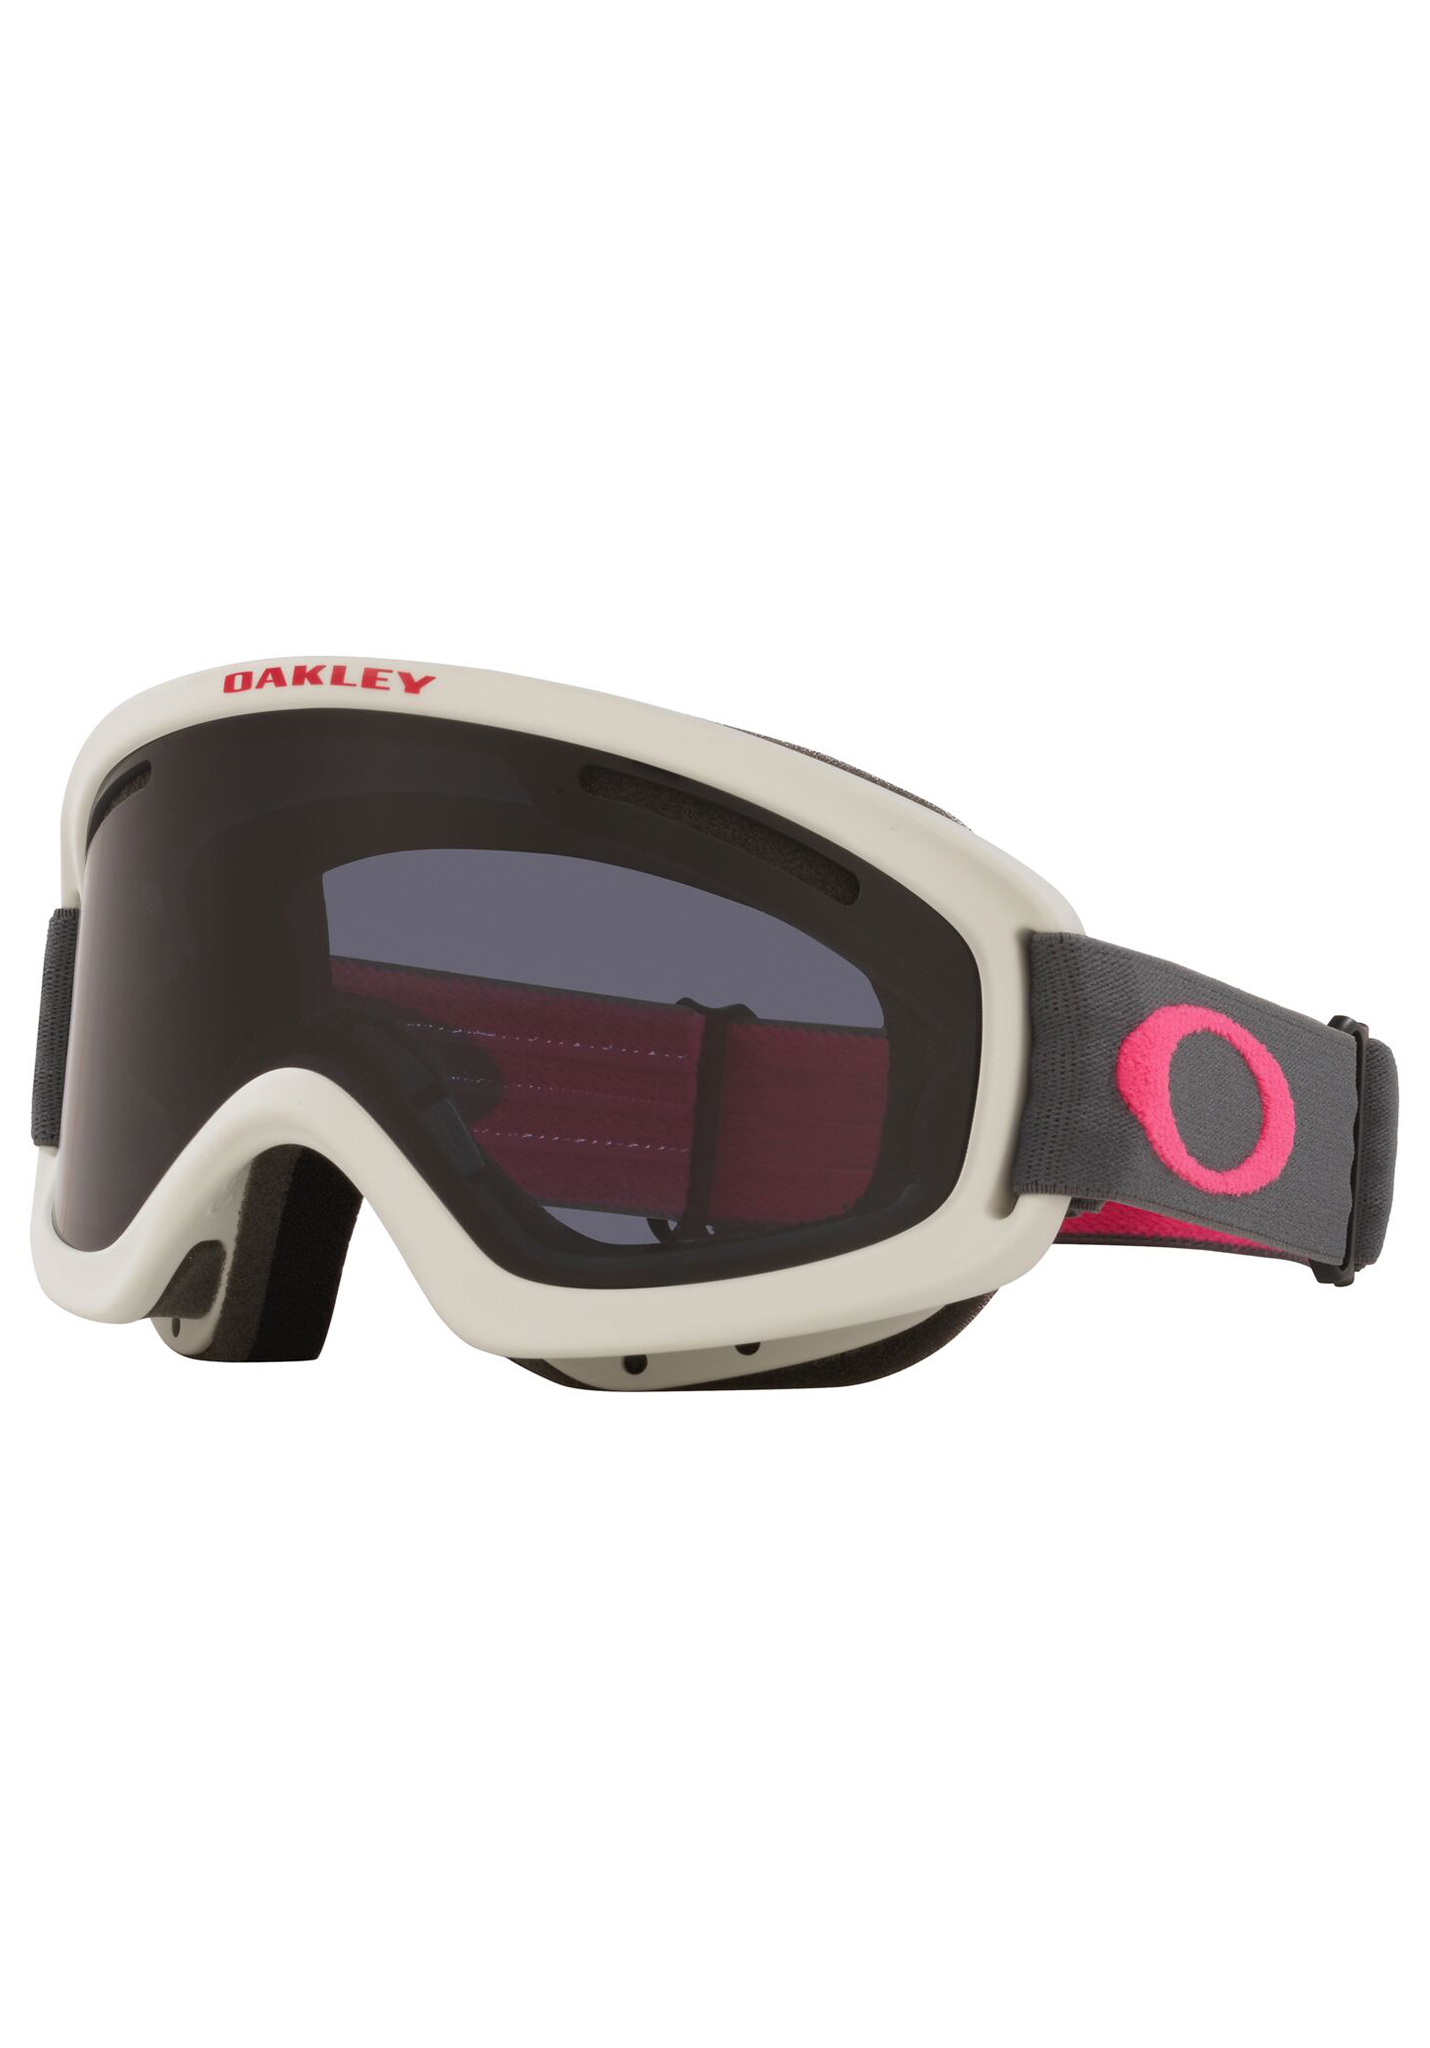 Oakley O Frame 2.0 Pro XS Snowboardbrillen dunkelgrau rubin/dunkelgrau & kakifarben One Size